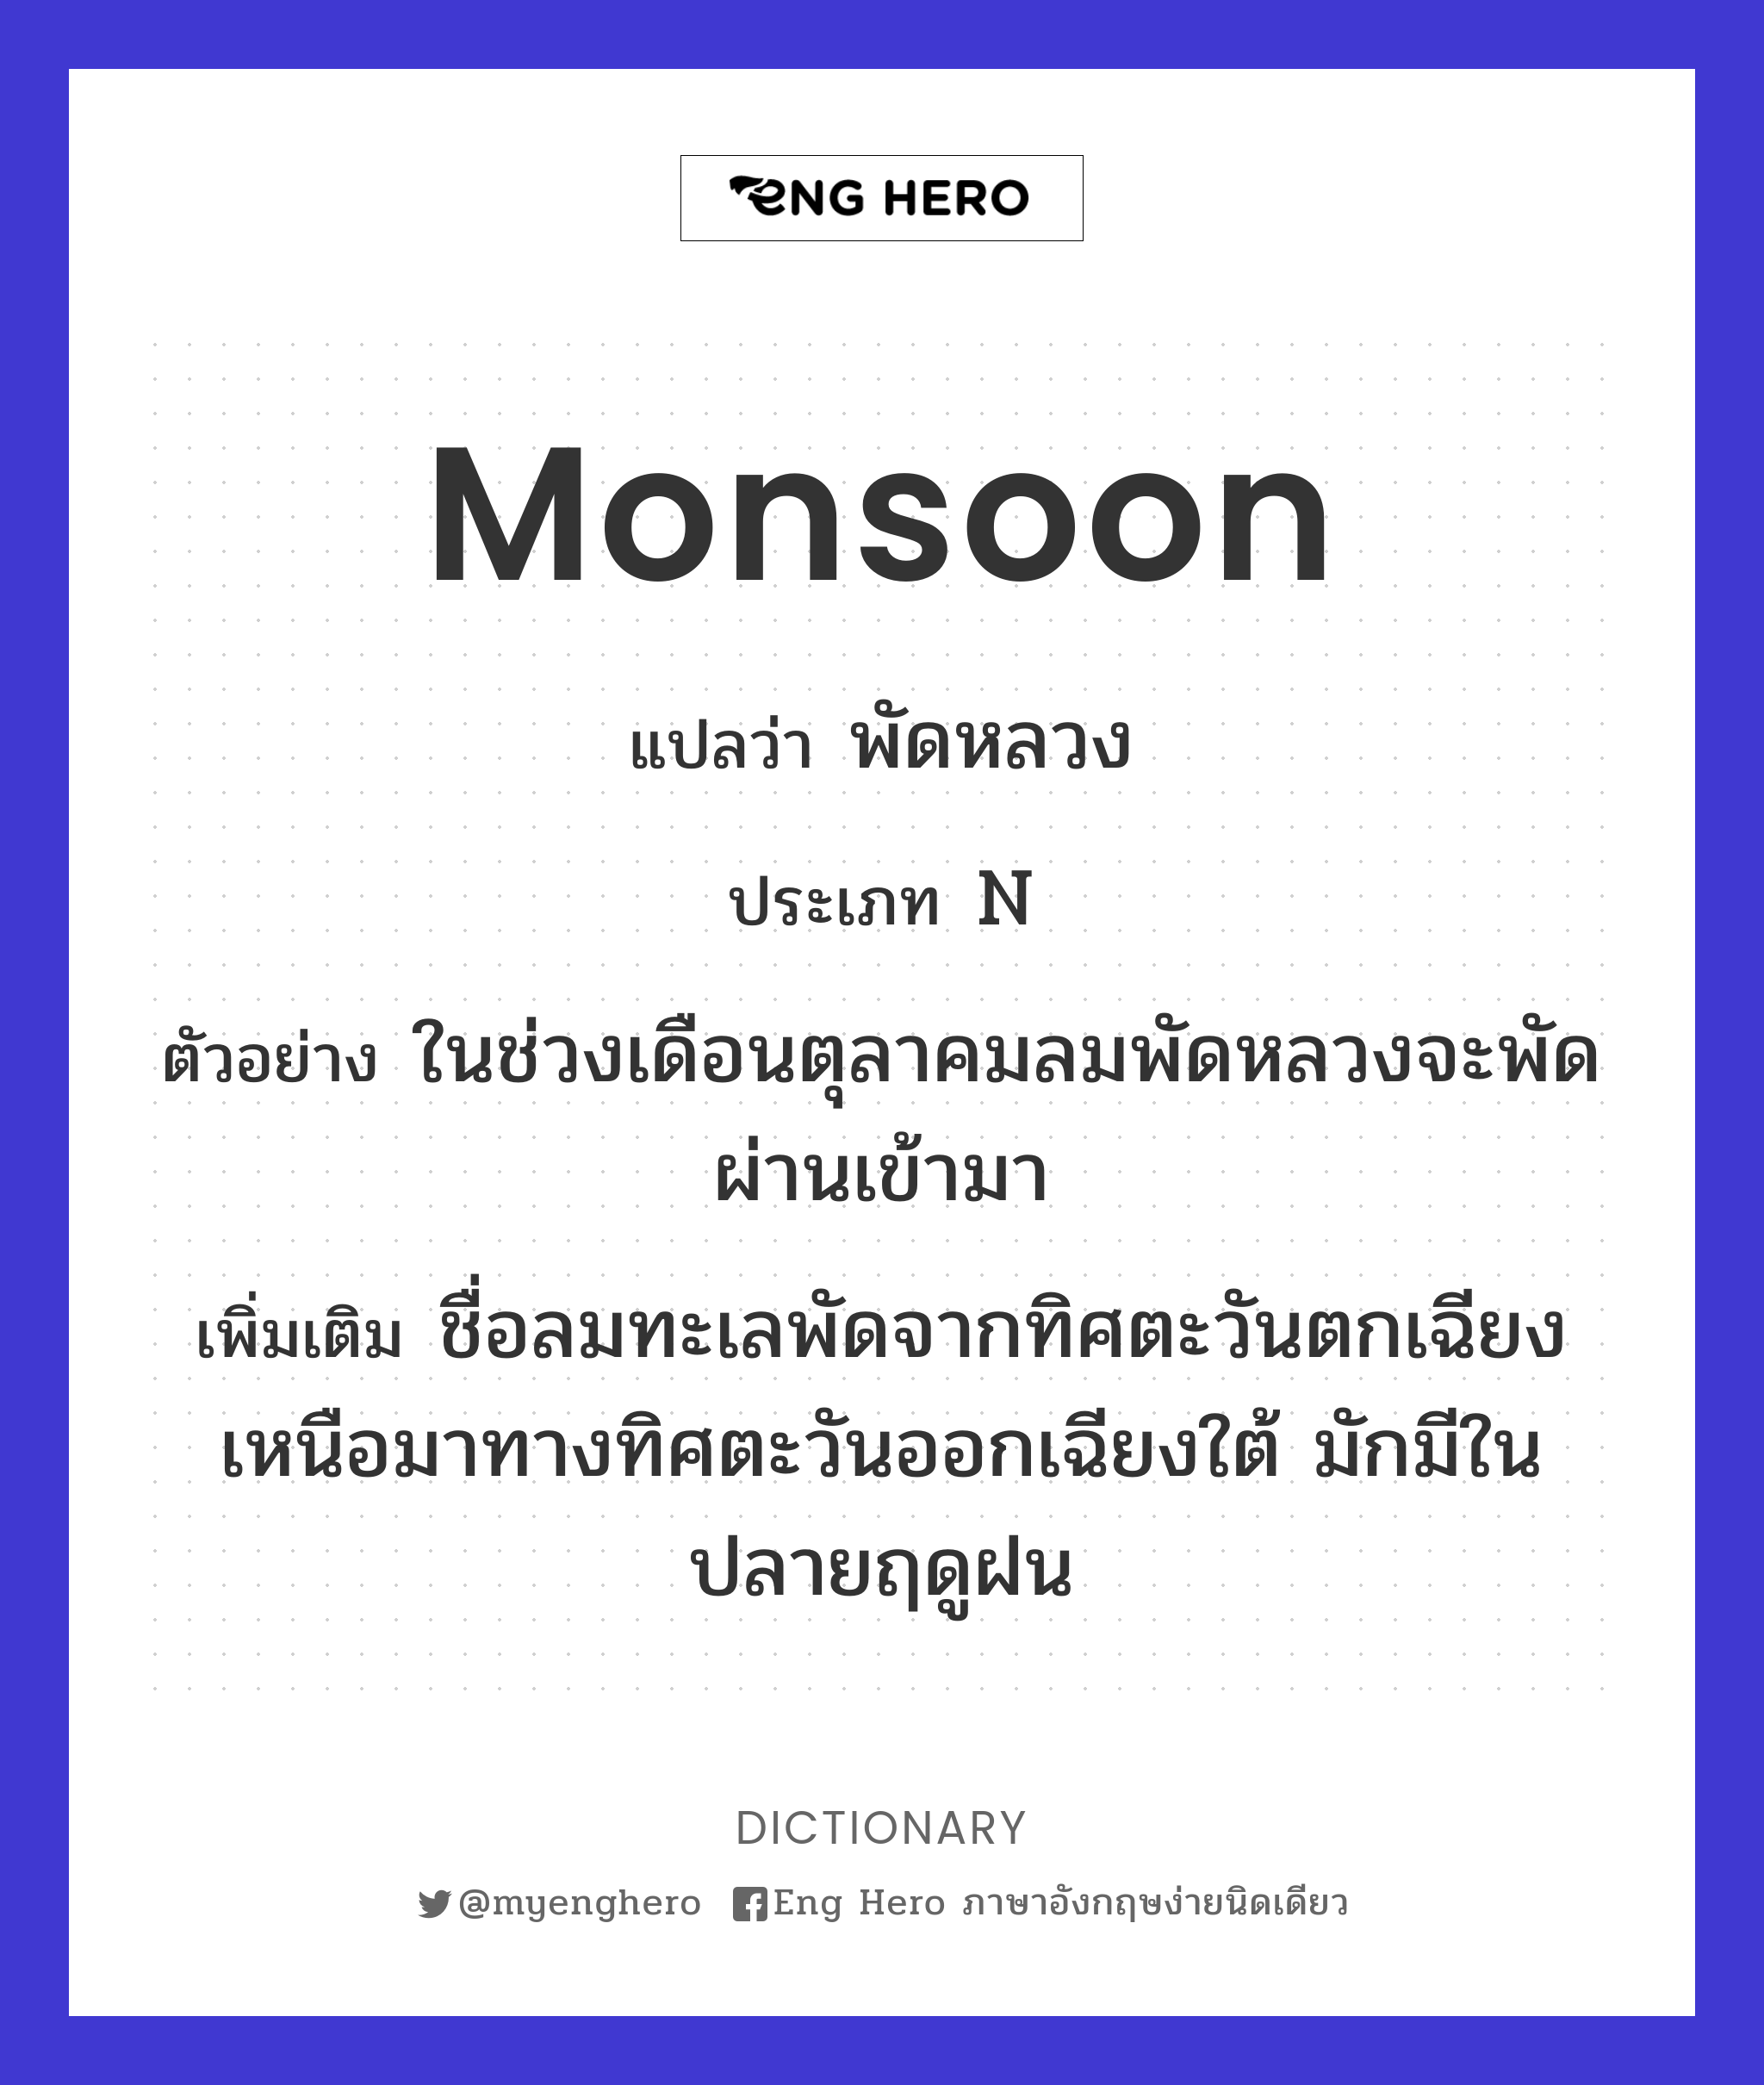 monsoon